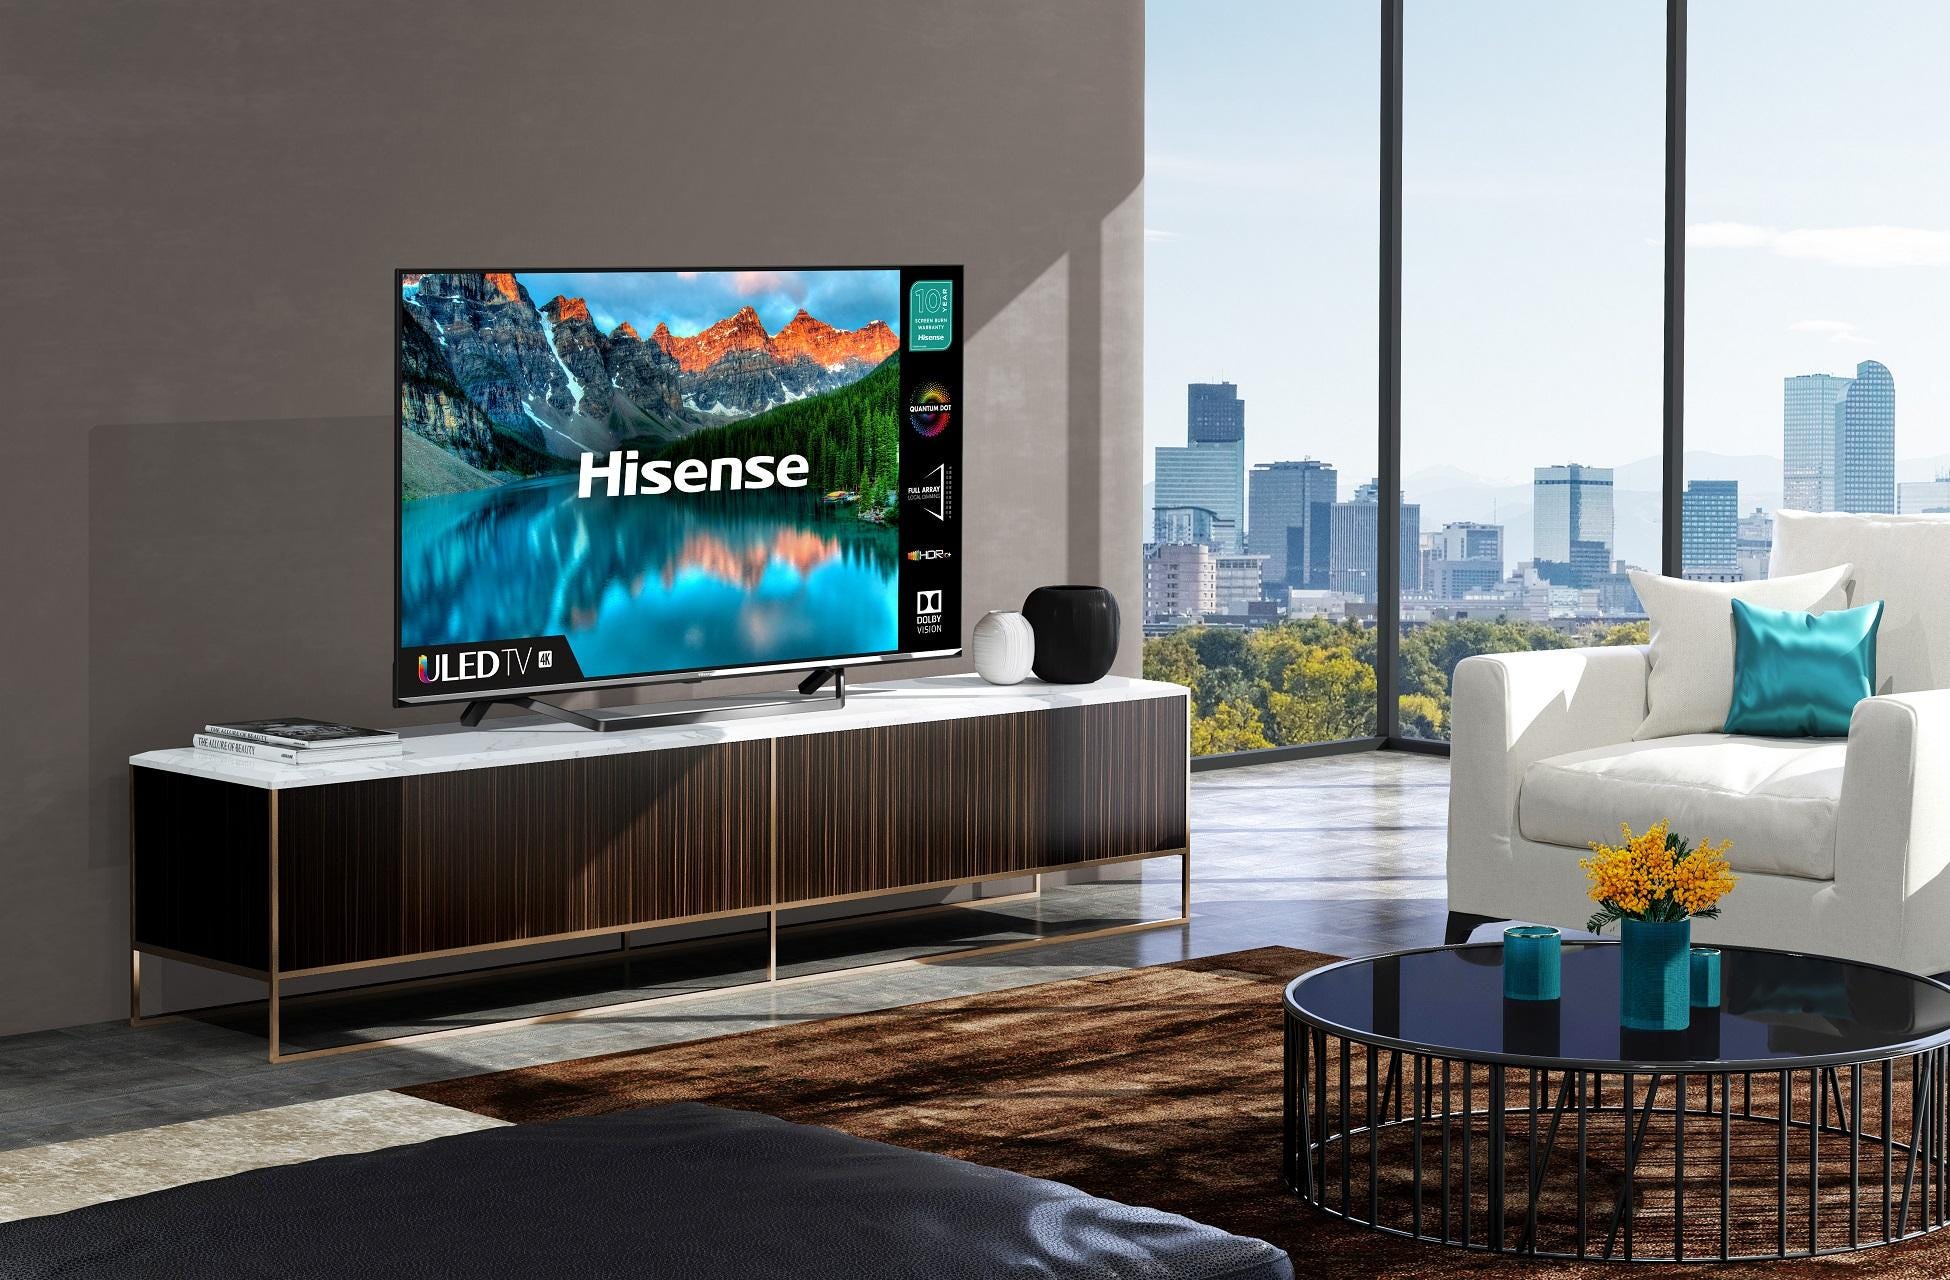 Review: Hisense 50U7QFTUK -Excellent TV, good value, enhanced picture clarity…